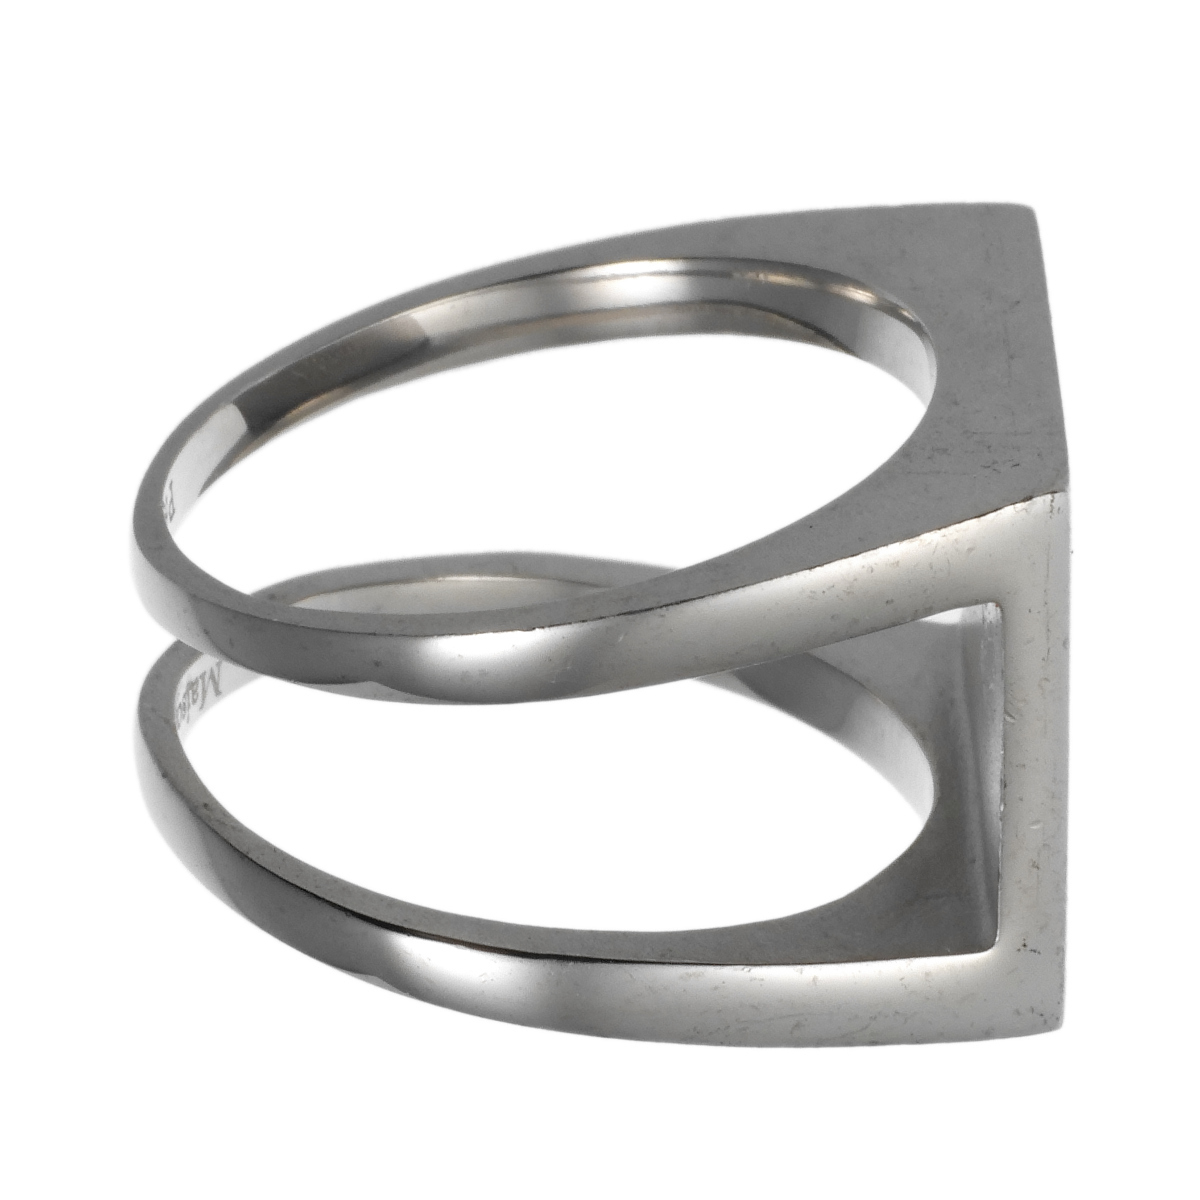 MAISON MARGIELA mezzo n Margiela серебряное кольцо SV925 размер 19.5 номер 9.8g мужской б/у AB[. магазин ломбард J1017]